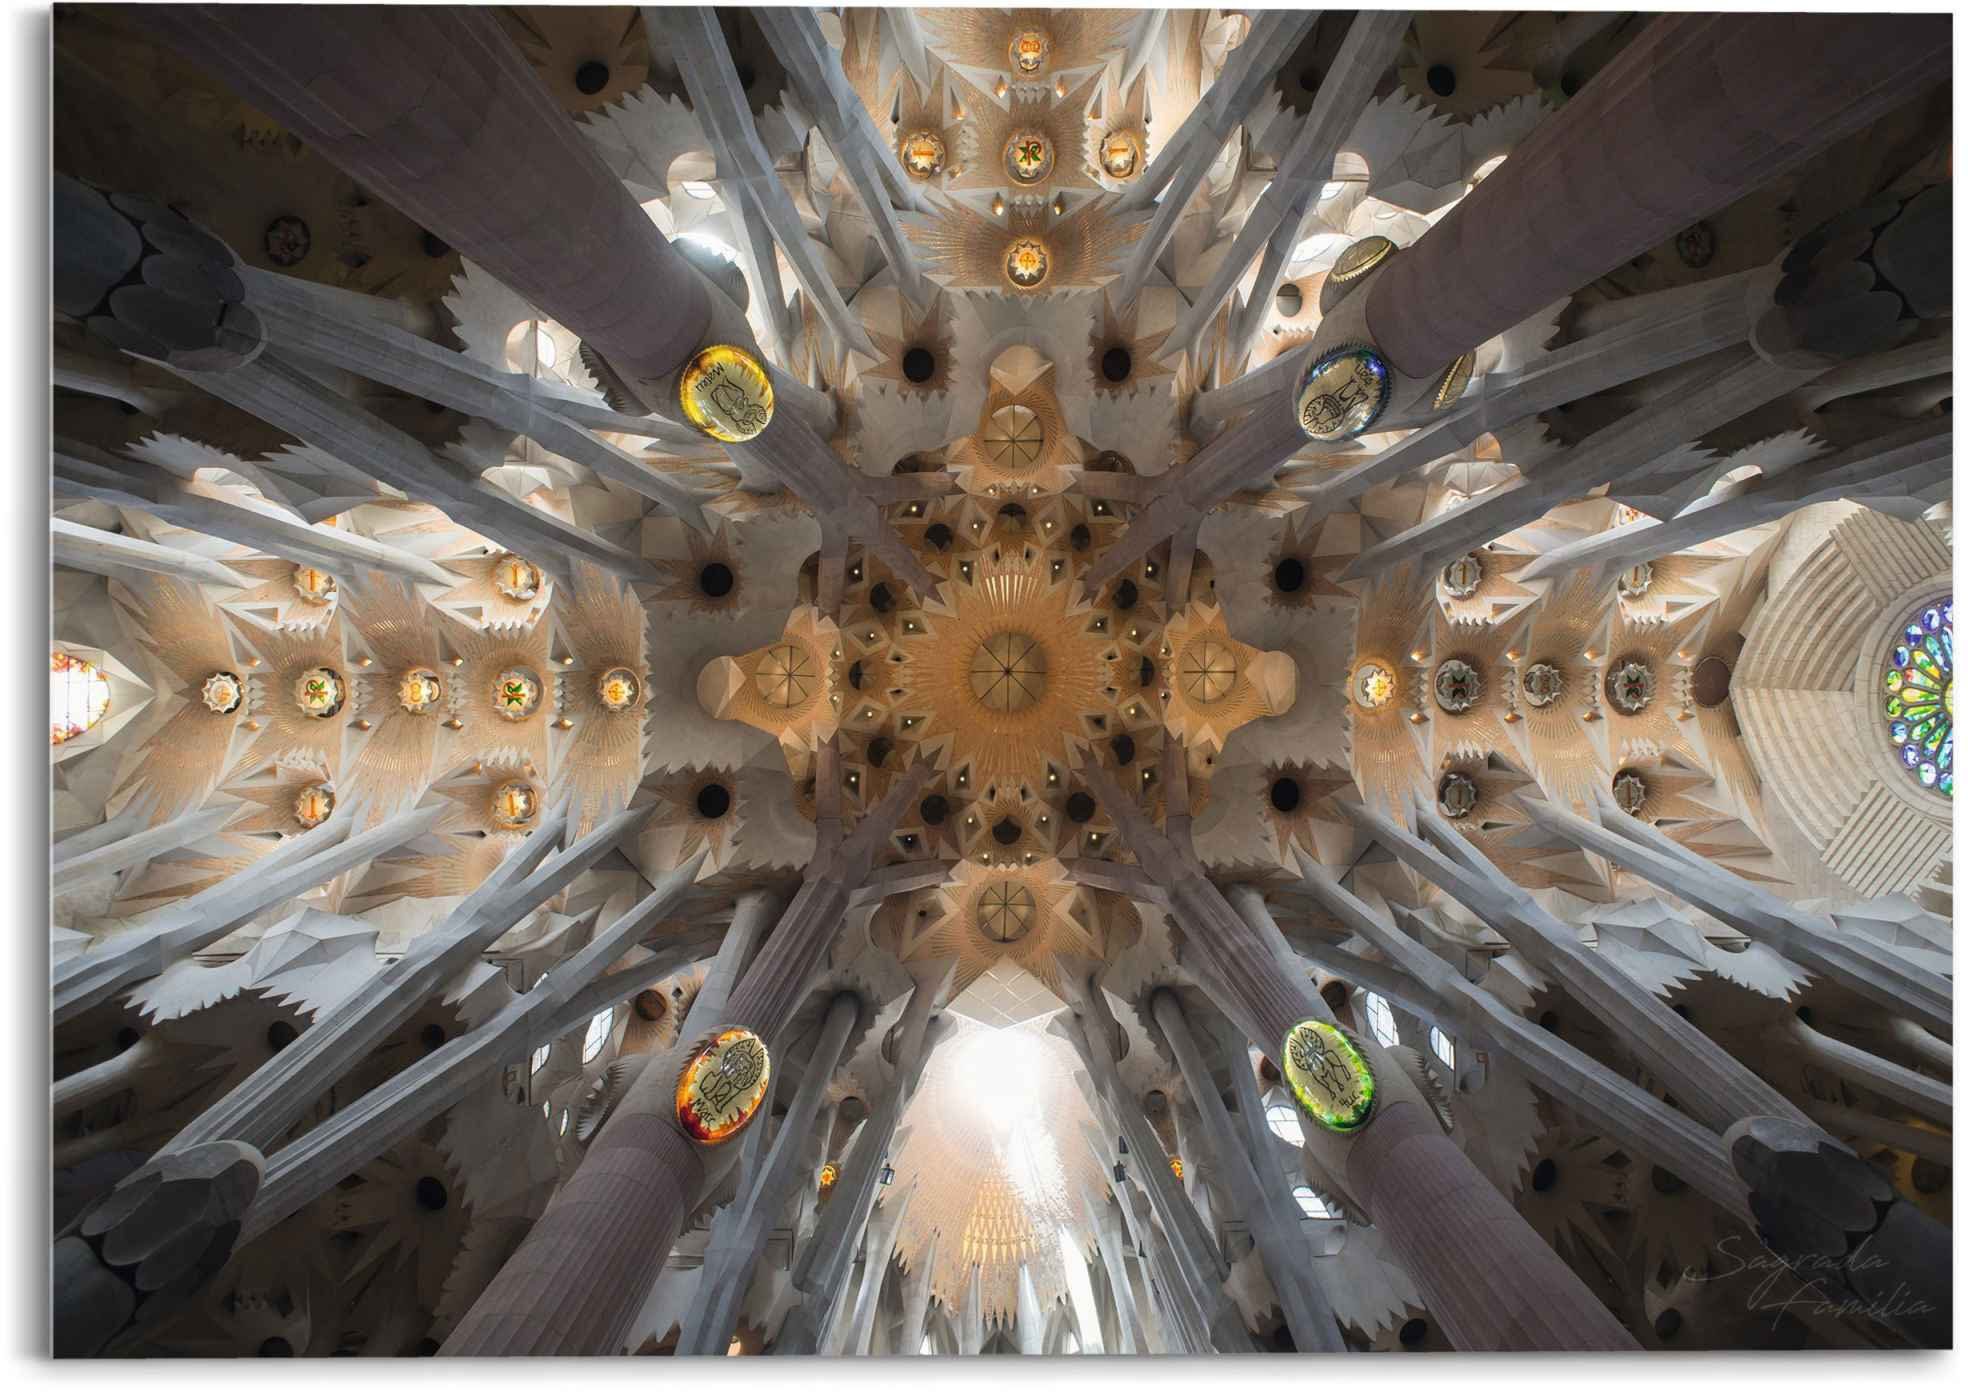 Reinders! Print op glas Artprint op glas Sagrada Familia Sara Franqui - fotografie - kunst (1 stuk)